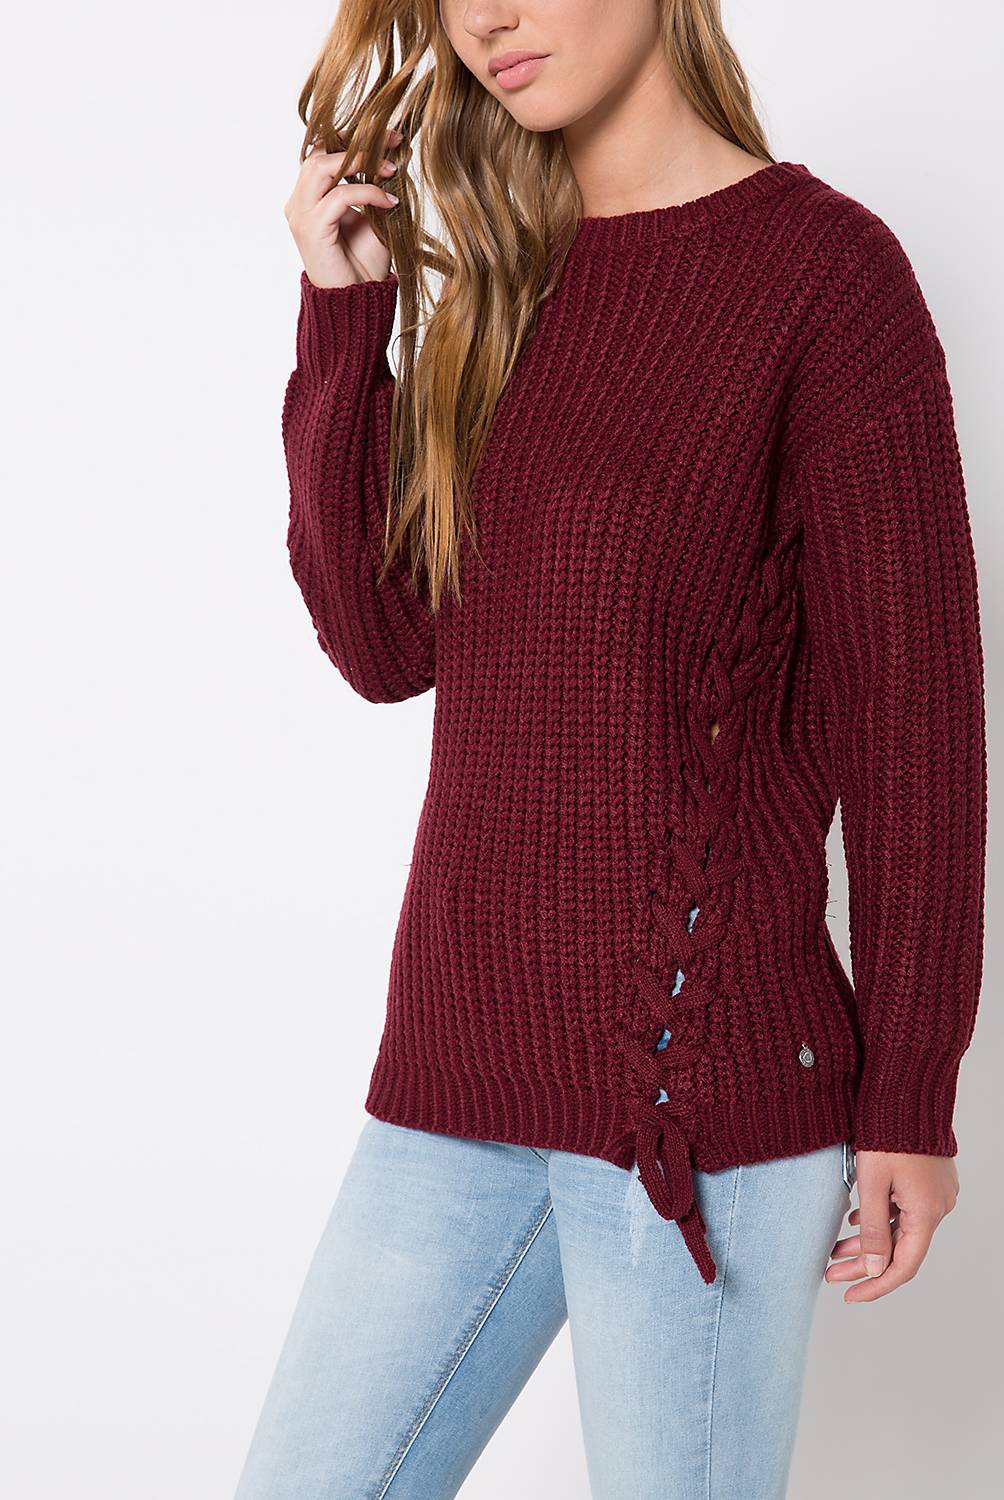 DENIMLAB - Sweater Trenza Lado